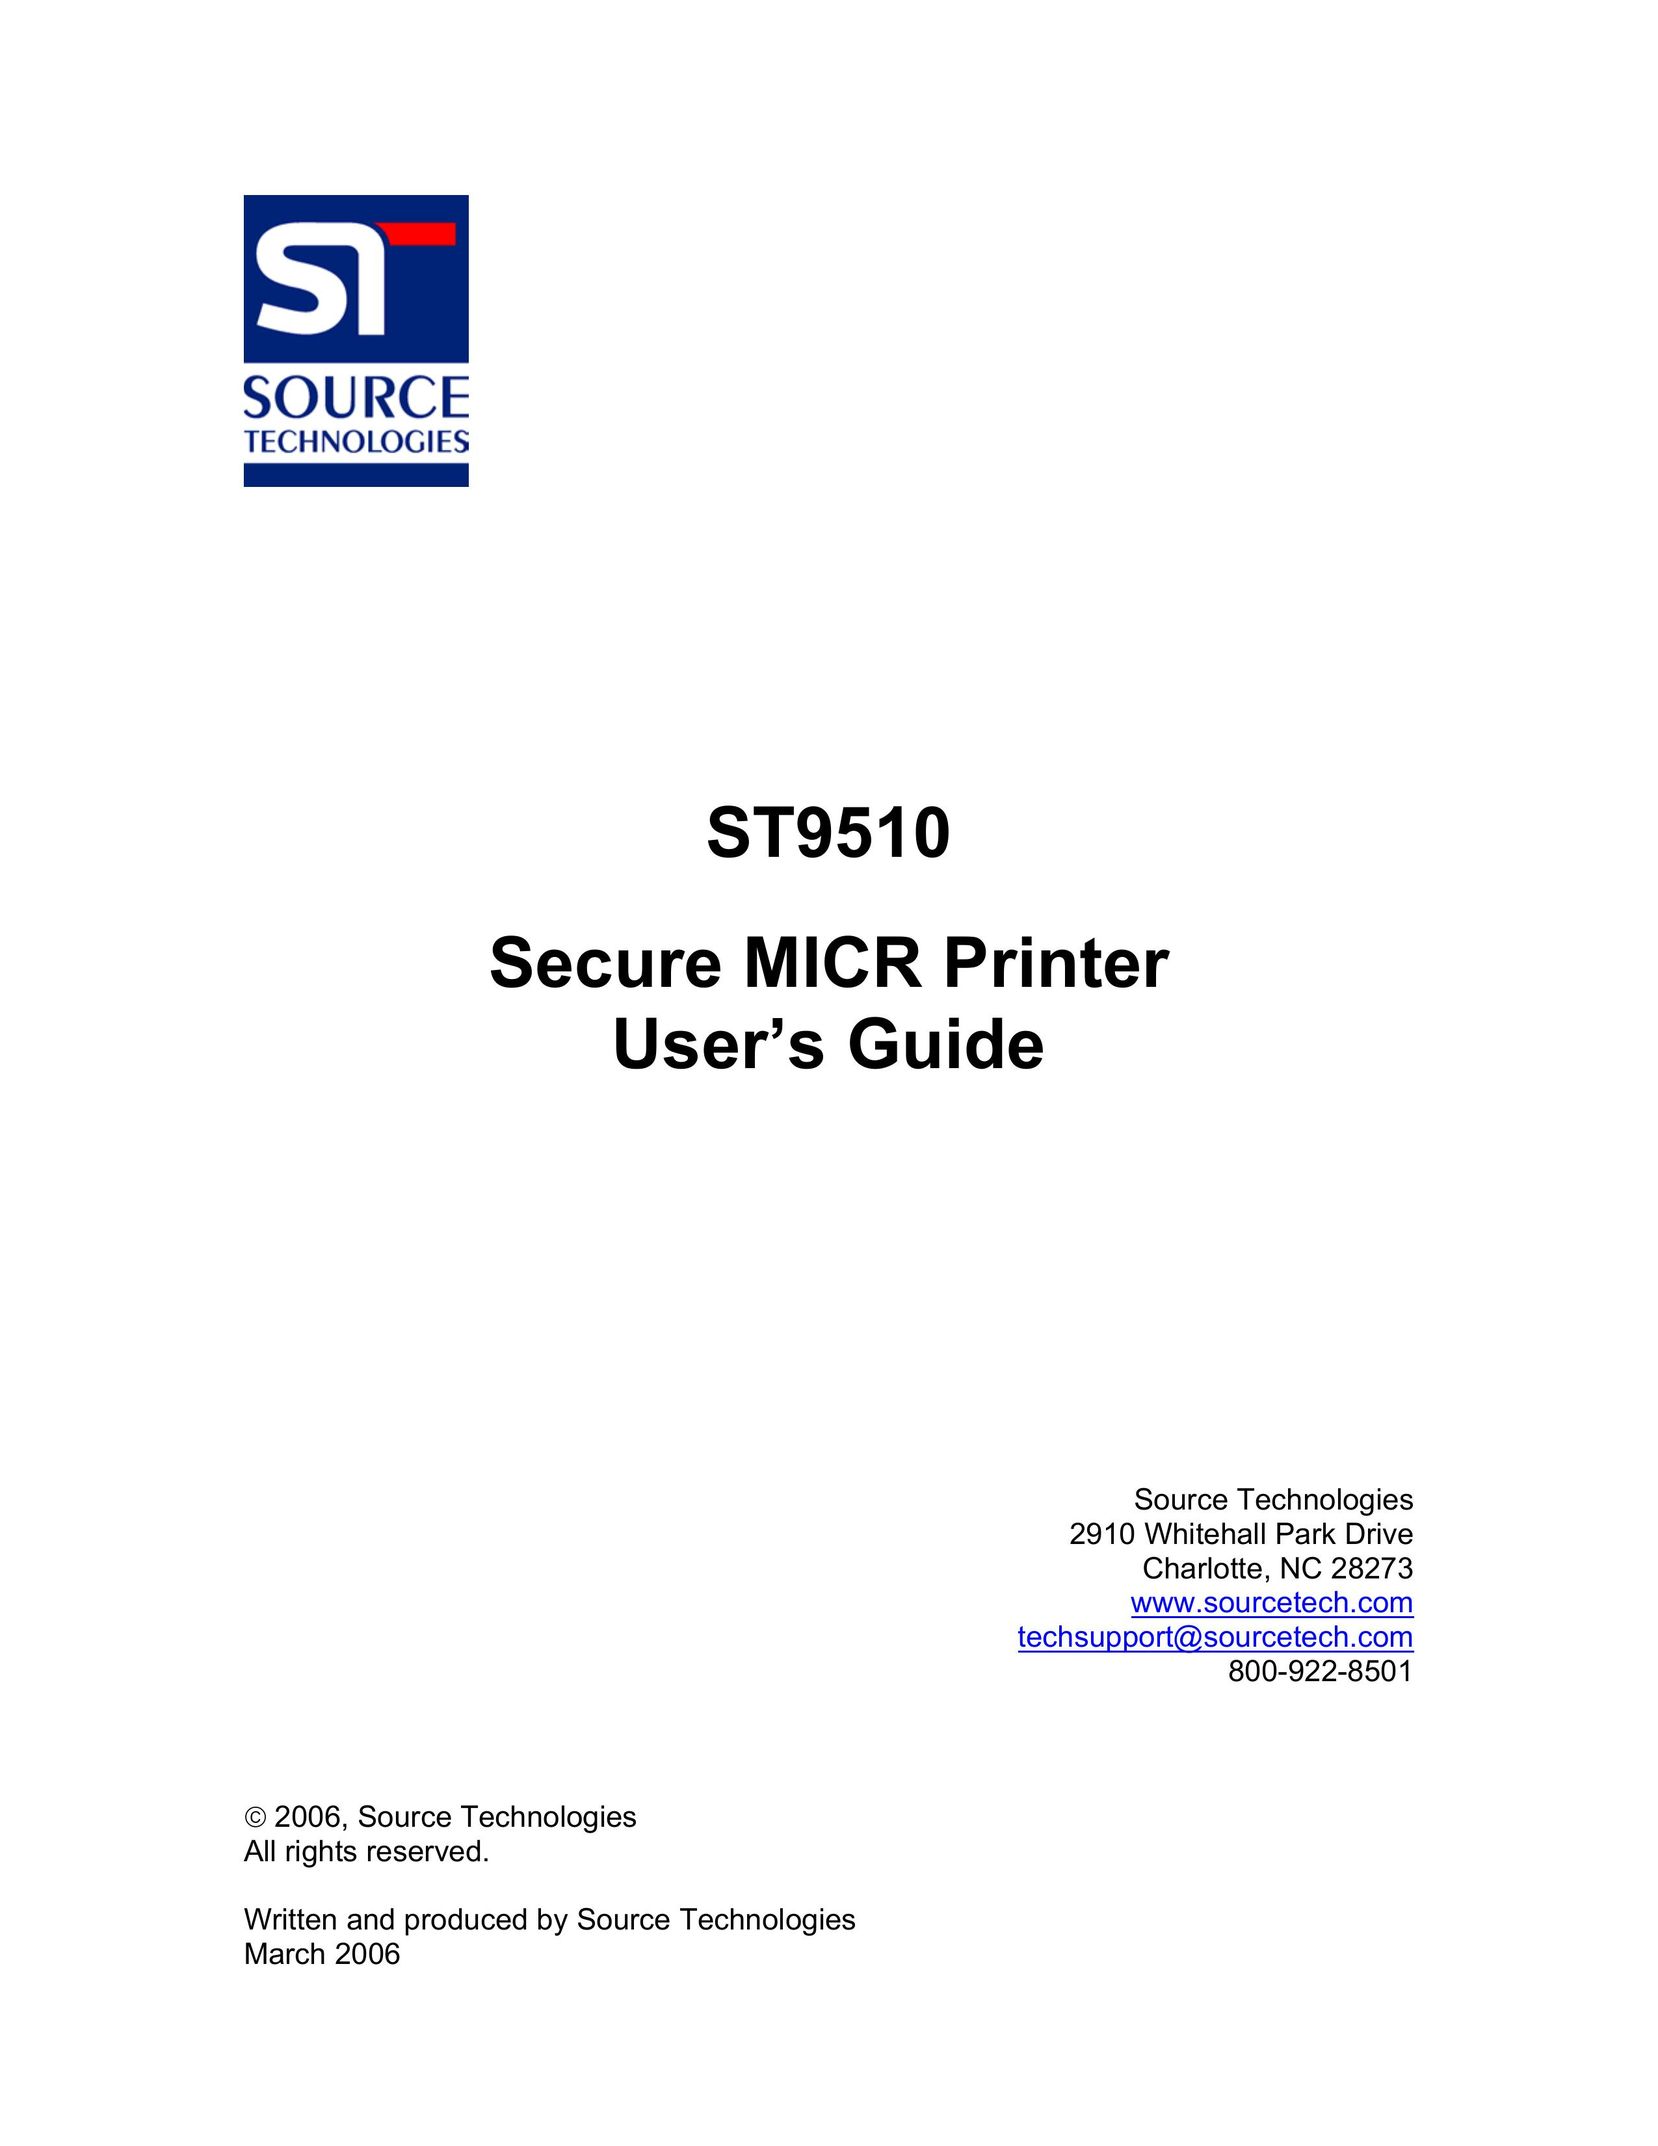 Source Technologies ST9510 Fax Machine User Manual